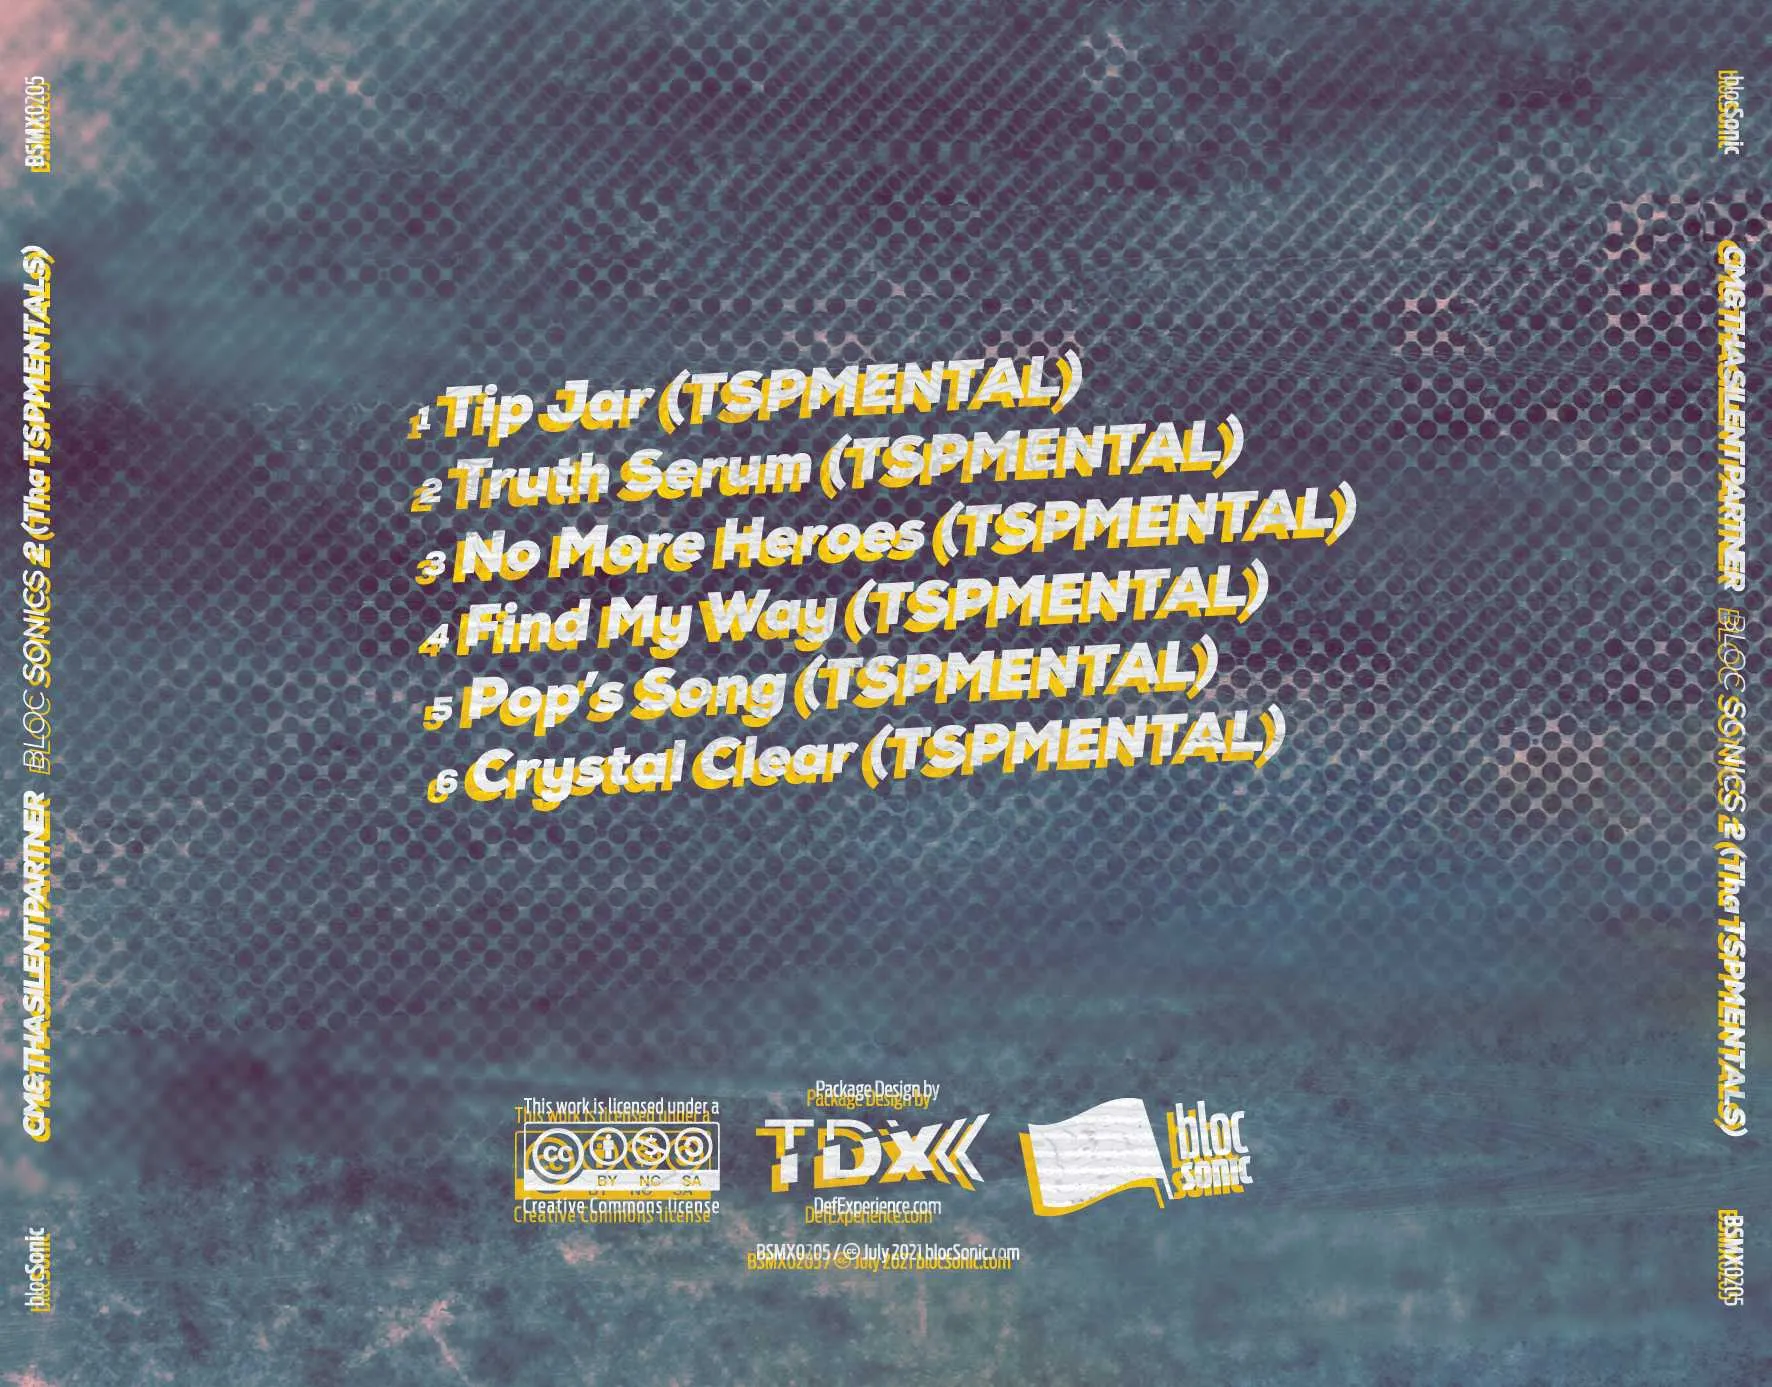 Album traycard for “bloc Sonics 2 (Tha TSPMENTALS)” by CM &amp; Tha Silent Partner